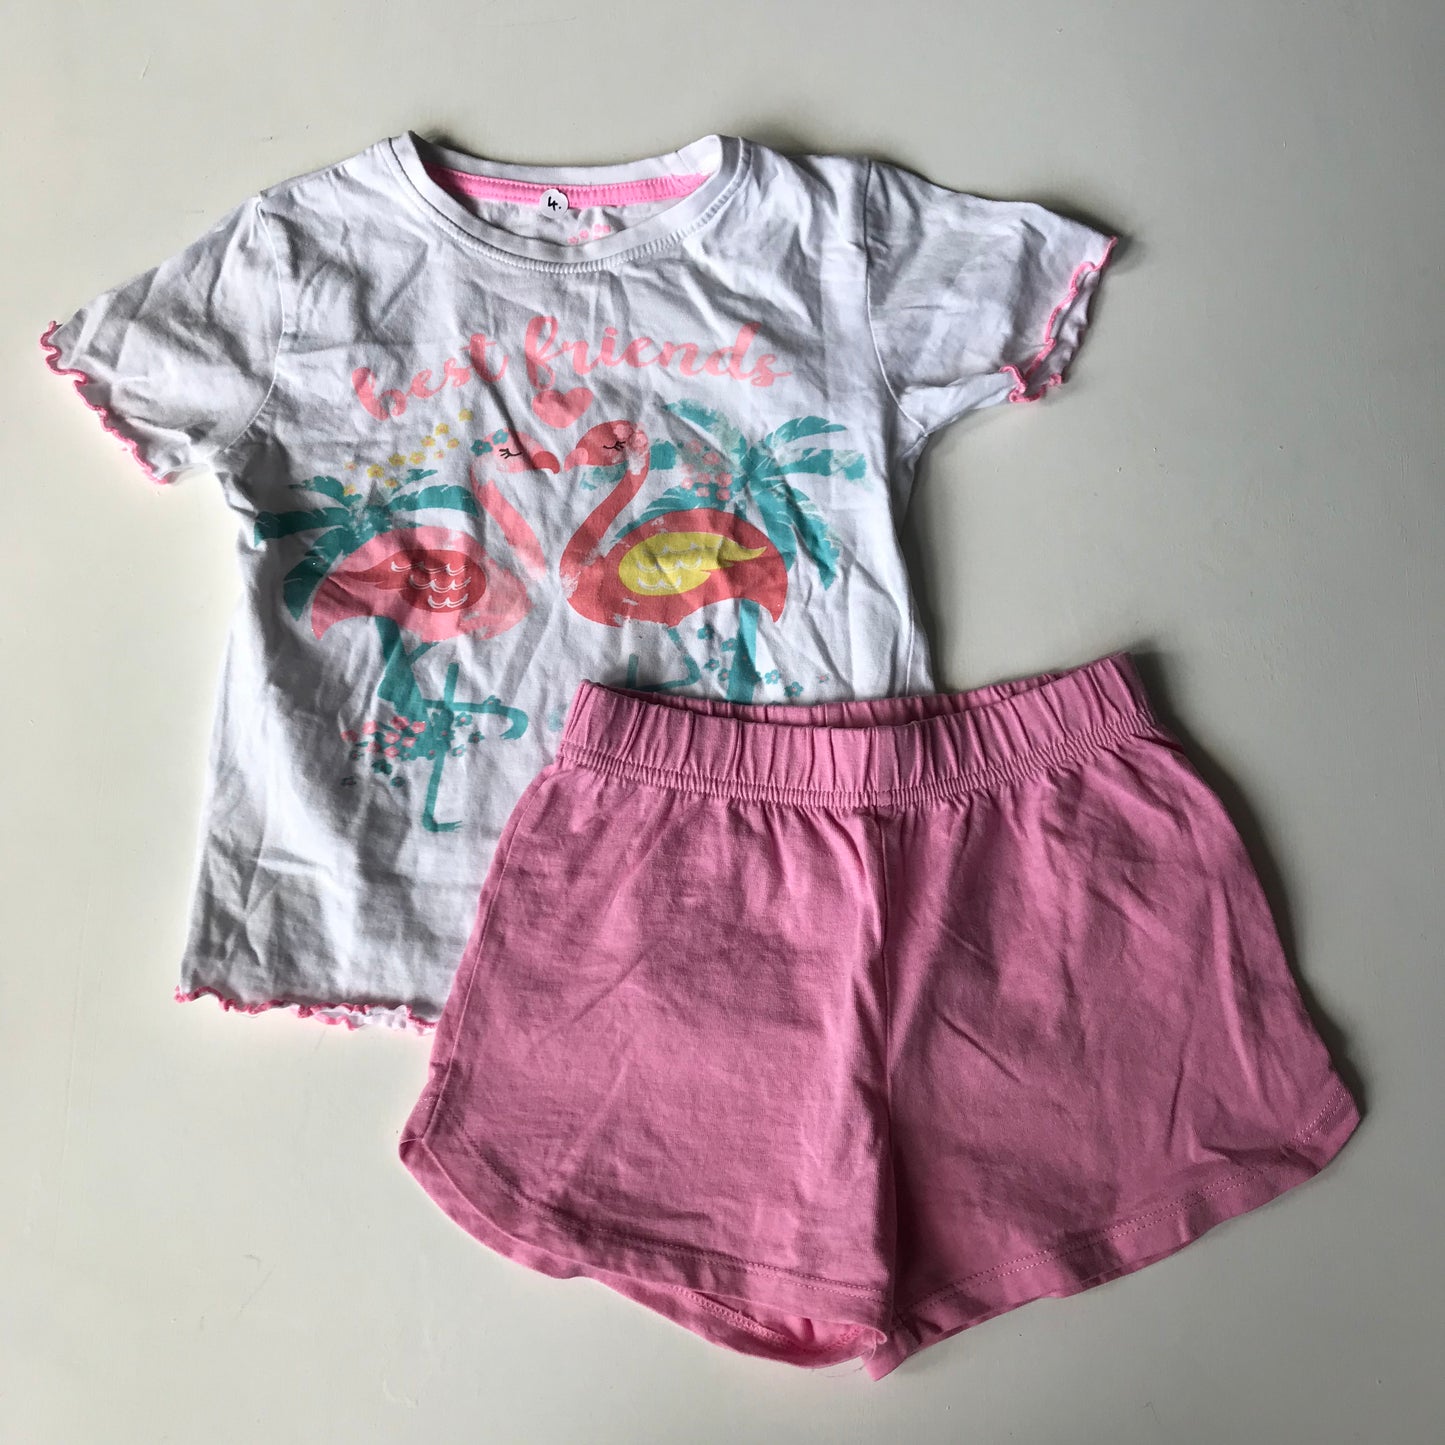 Bundle - T-shirt & Shorts - Age 4